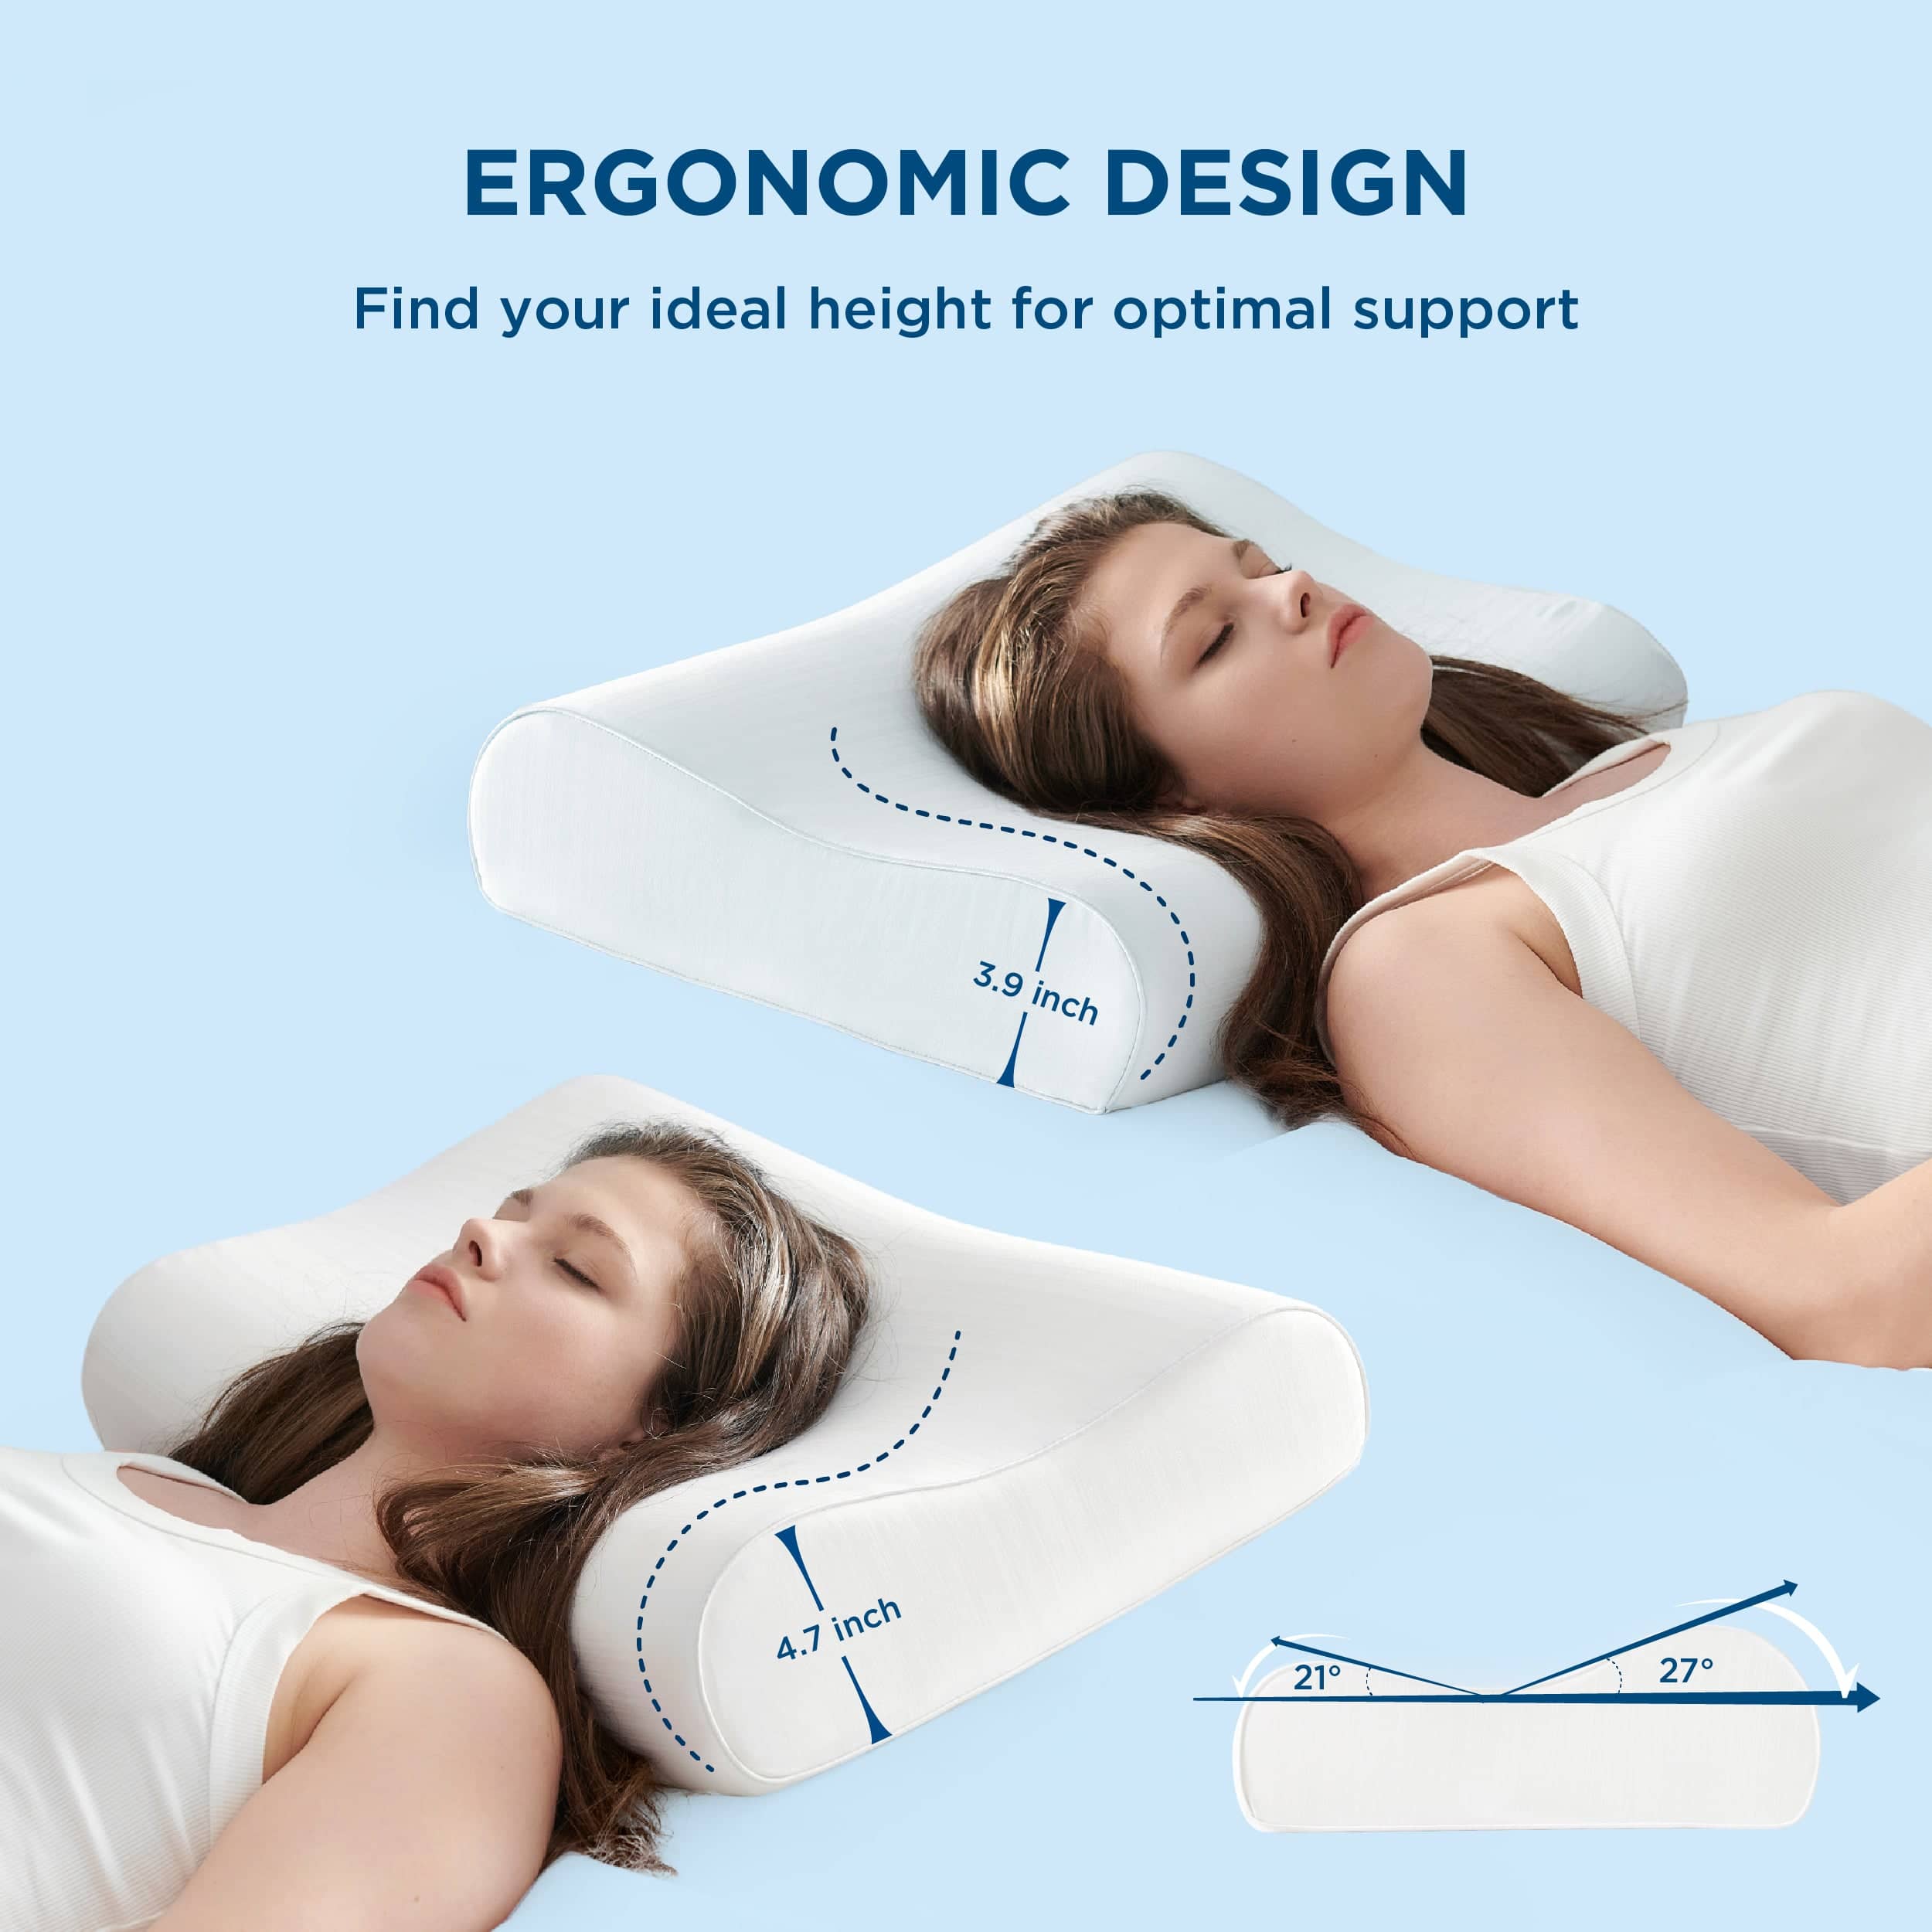 Bedsure Breescape Cooling Neck Cervical Pillow for Pain Relief